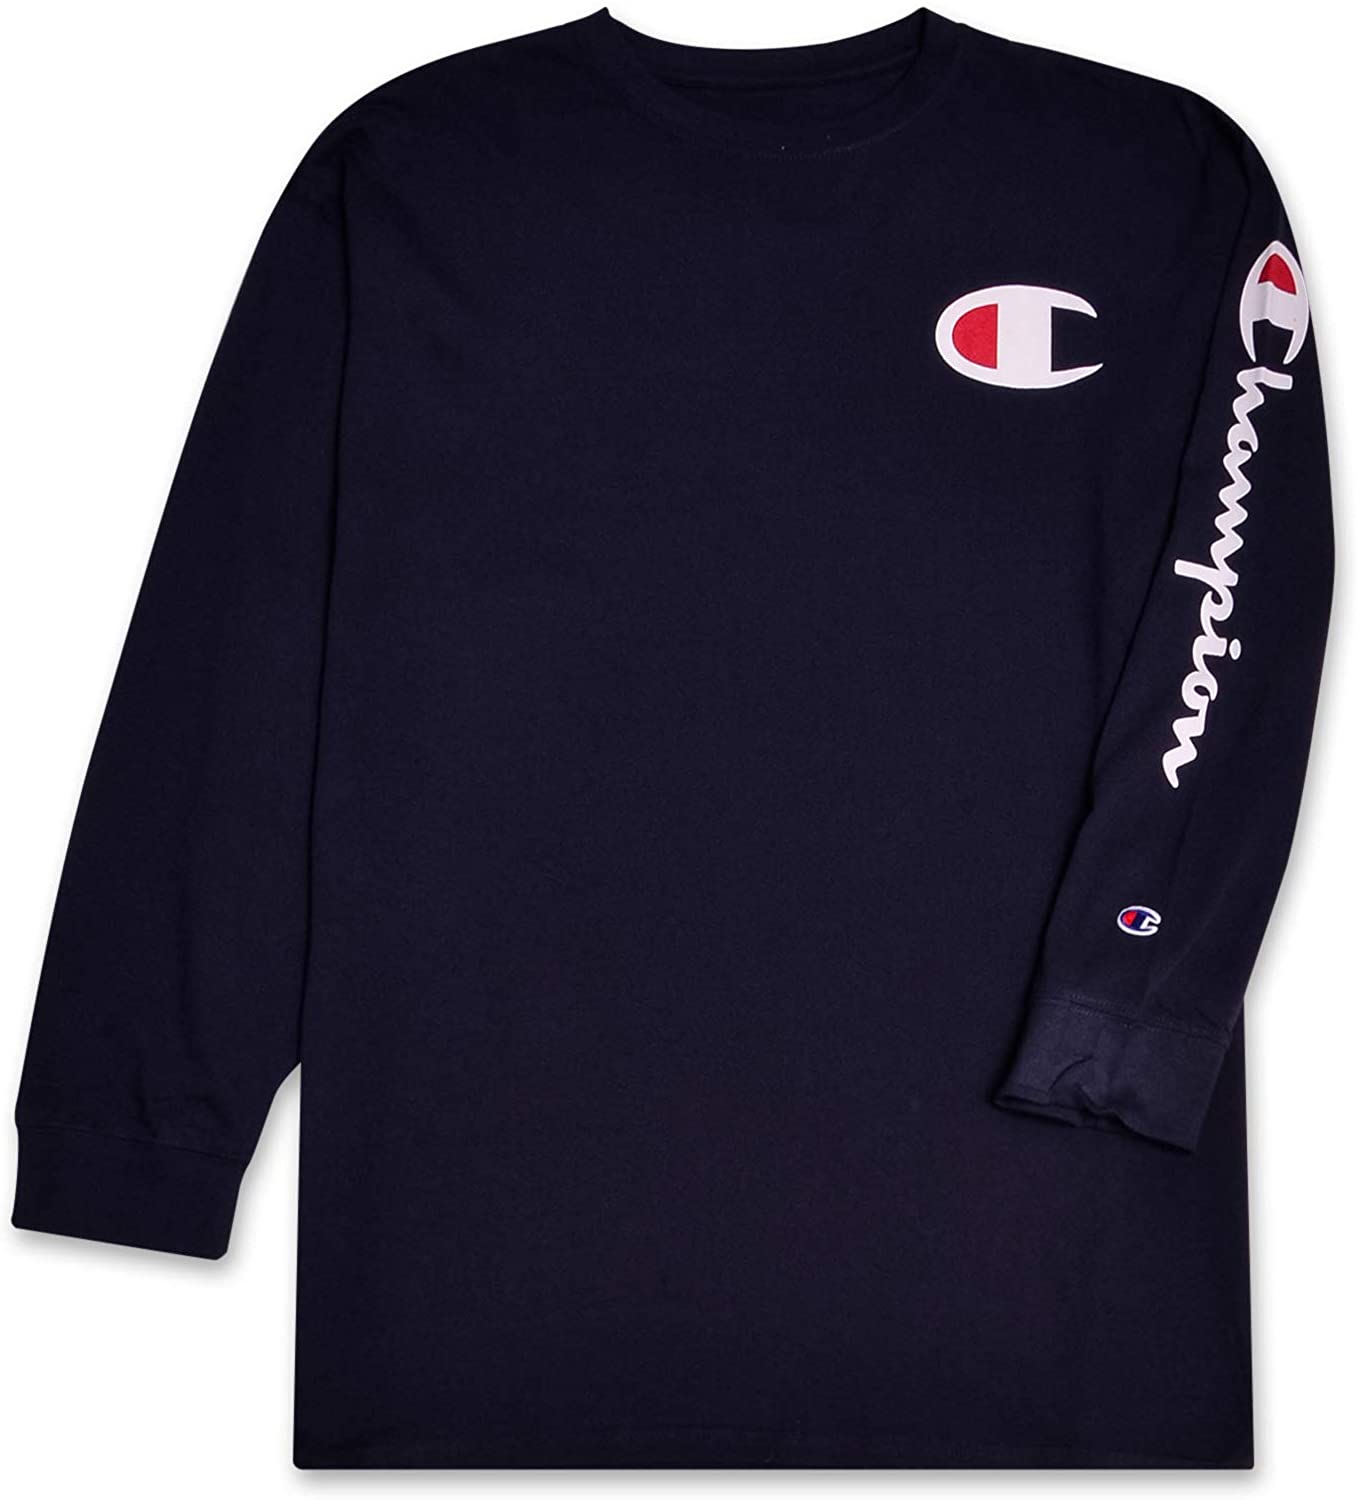 Champion T-Shirts for Men - Mens Long Sleeve Shirts Classic Mens Shirt | eBay